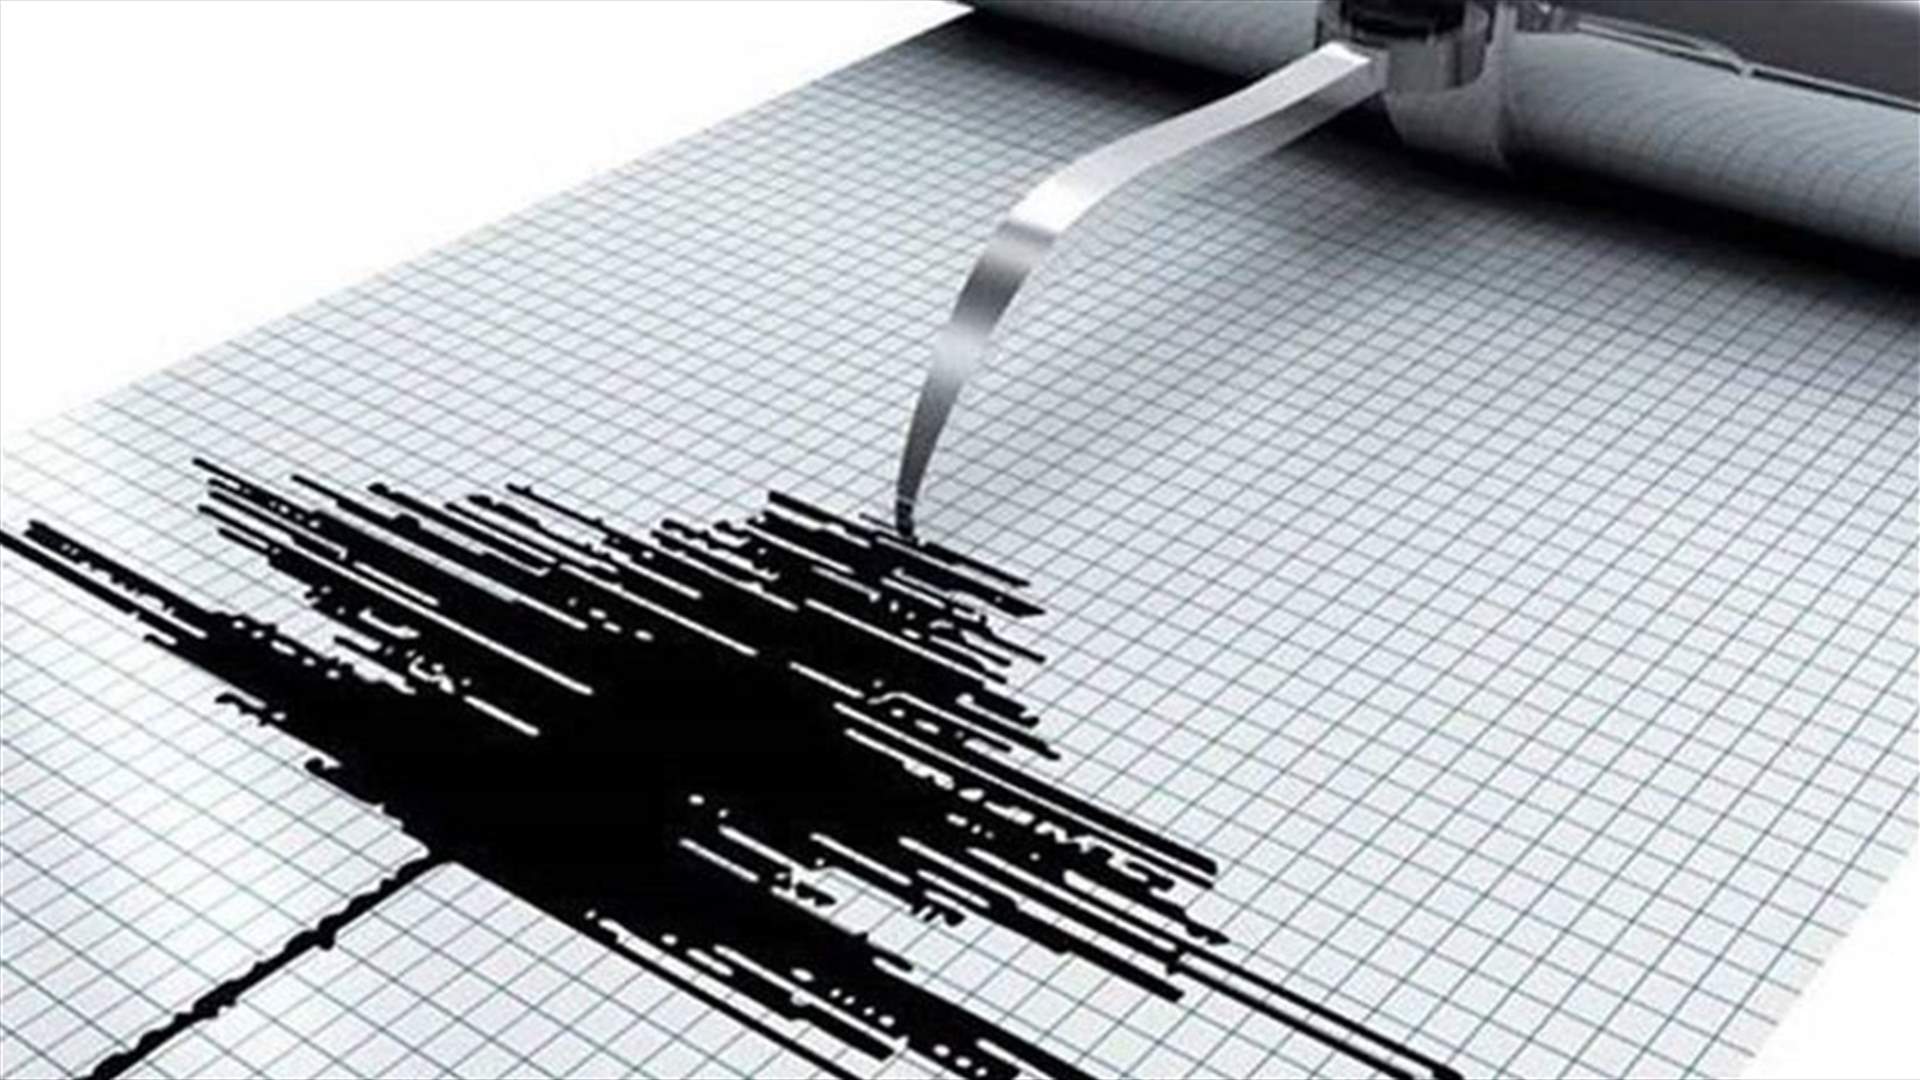 5.4 earthquake in Cyprus felt in Lebanon